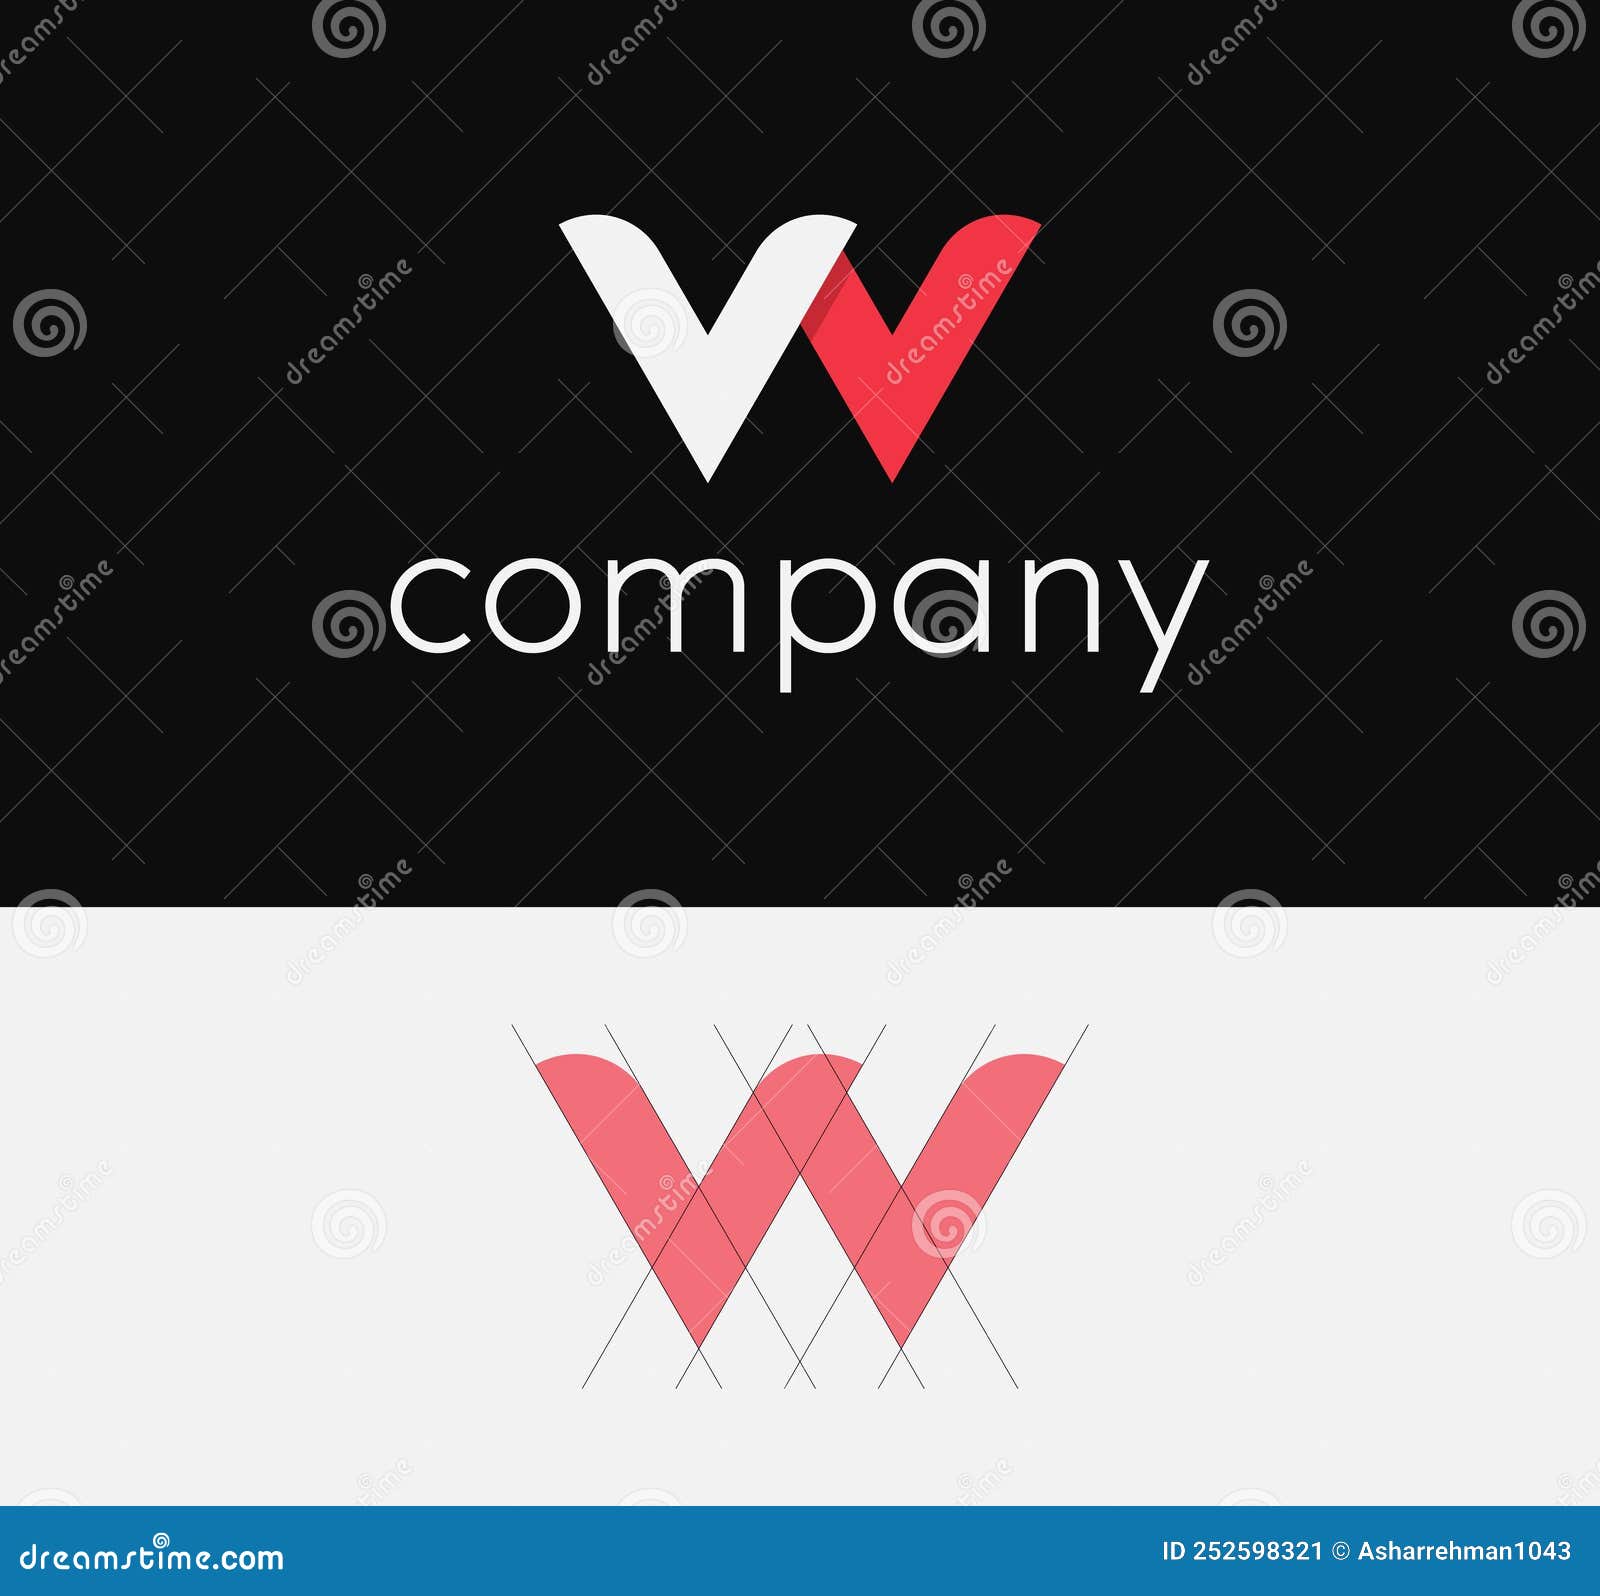 small logo design